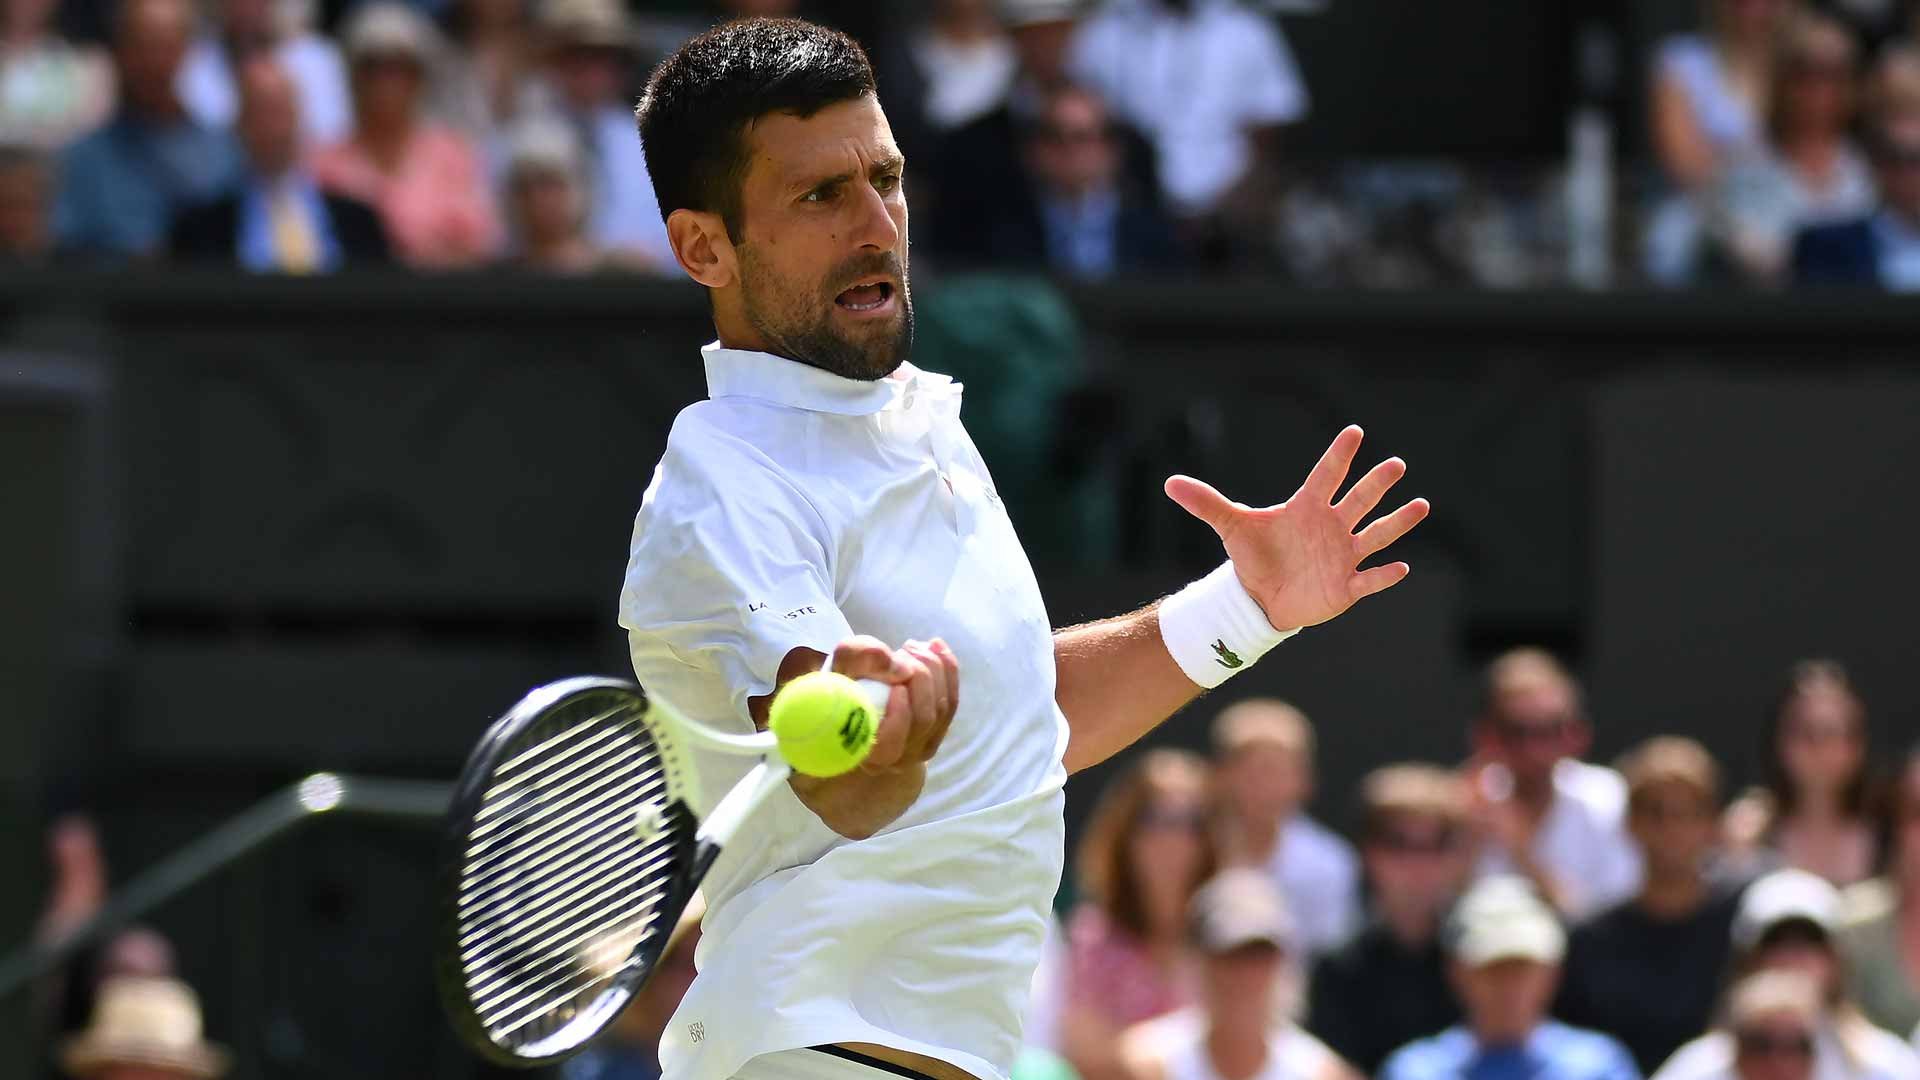 Djokovic returns to Indian Wells after five year hiatus | The Express Tribune